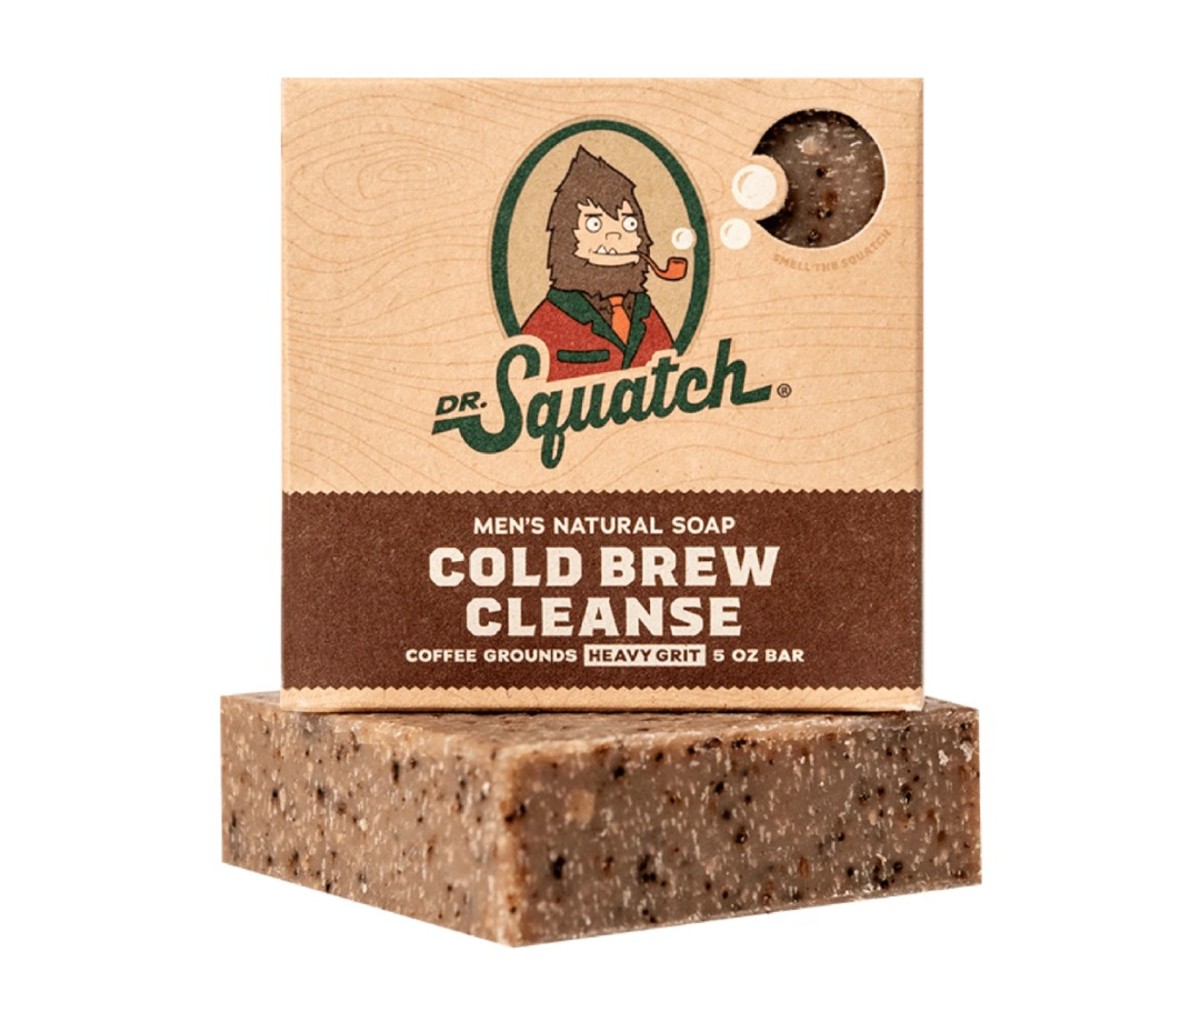 https://www.mensjournal.com/.image/t_share/MTk2MTM3MDE3NjQ0OTUwNjcz/18-dr-squatch-cold-brew-cleanse-bar-soap.jpg